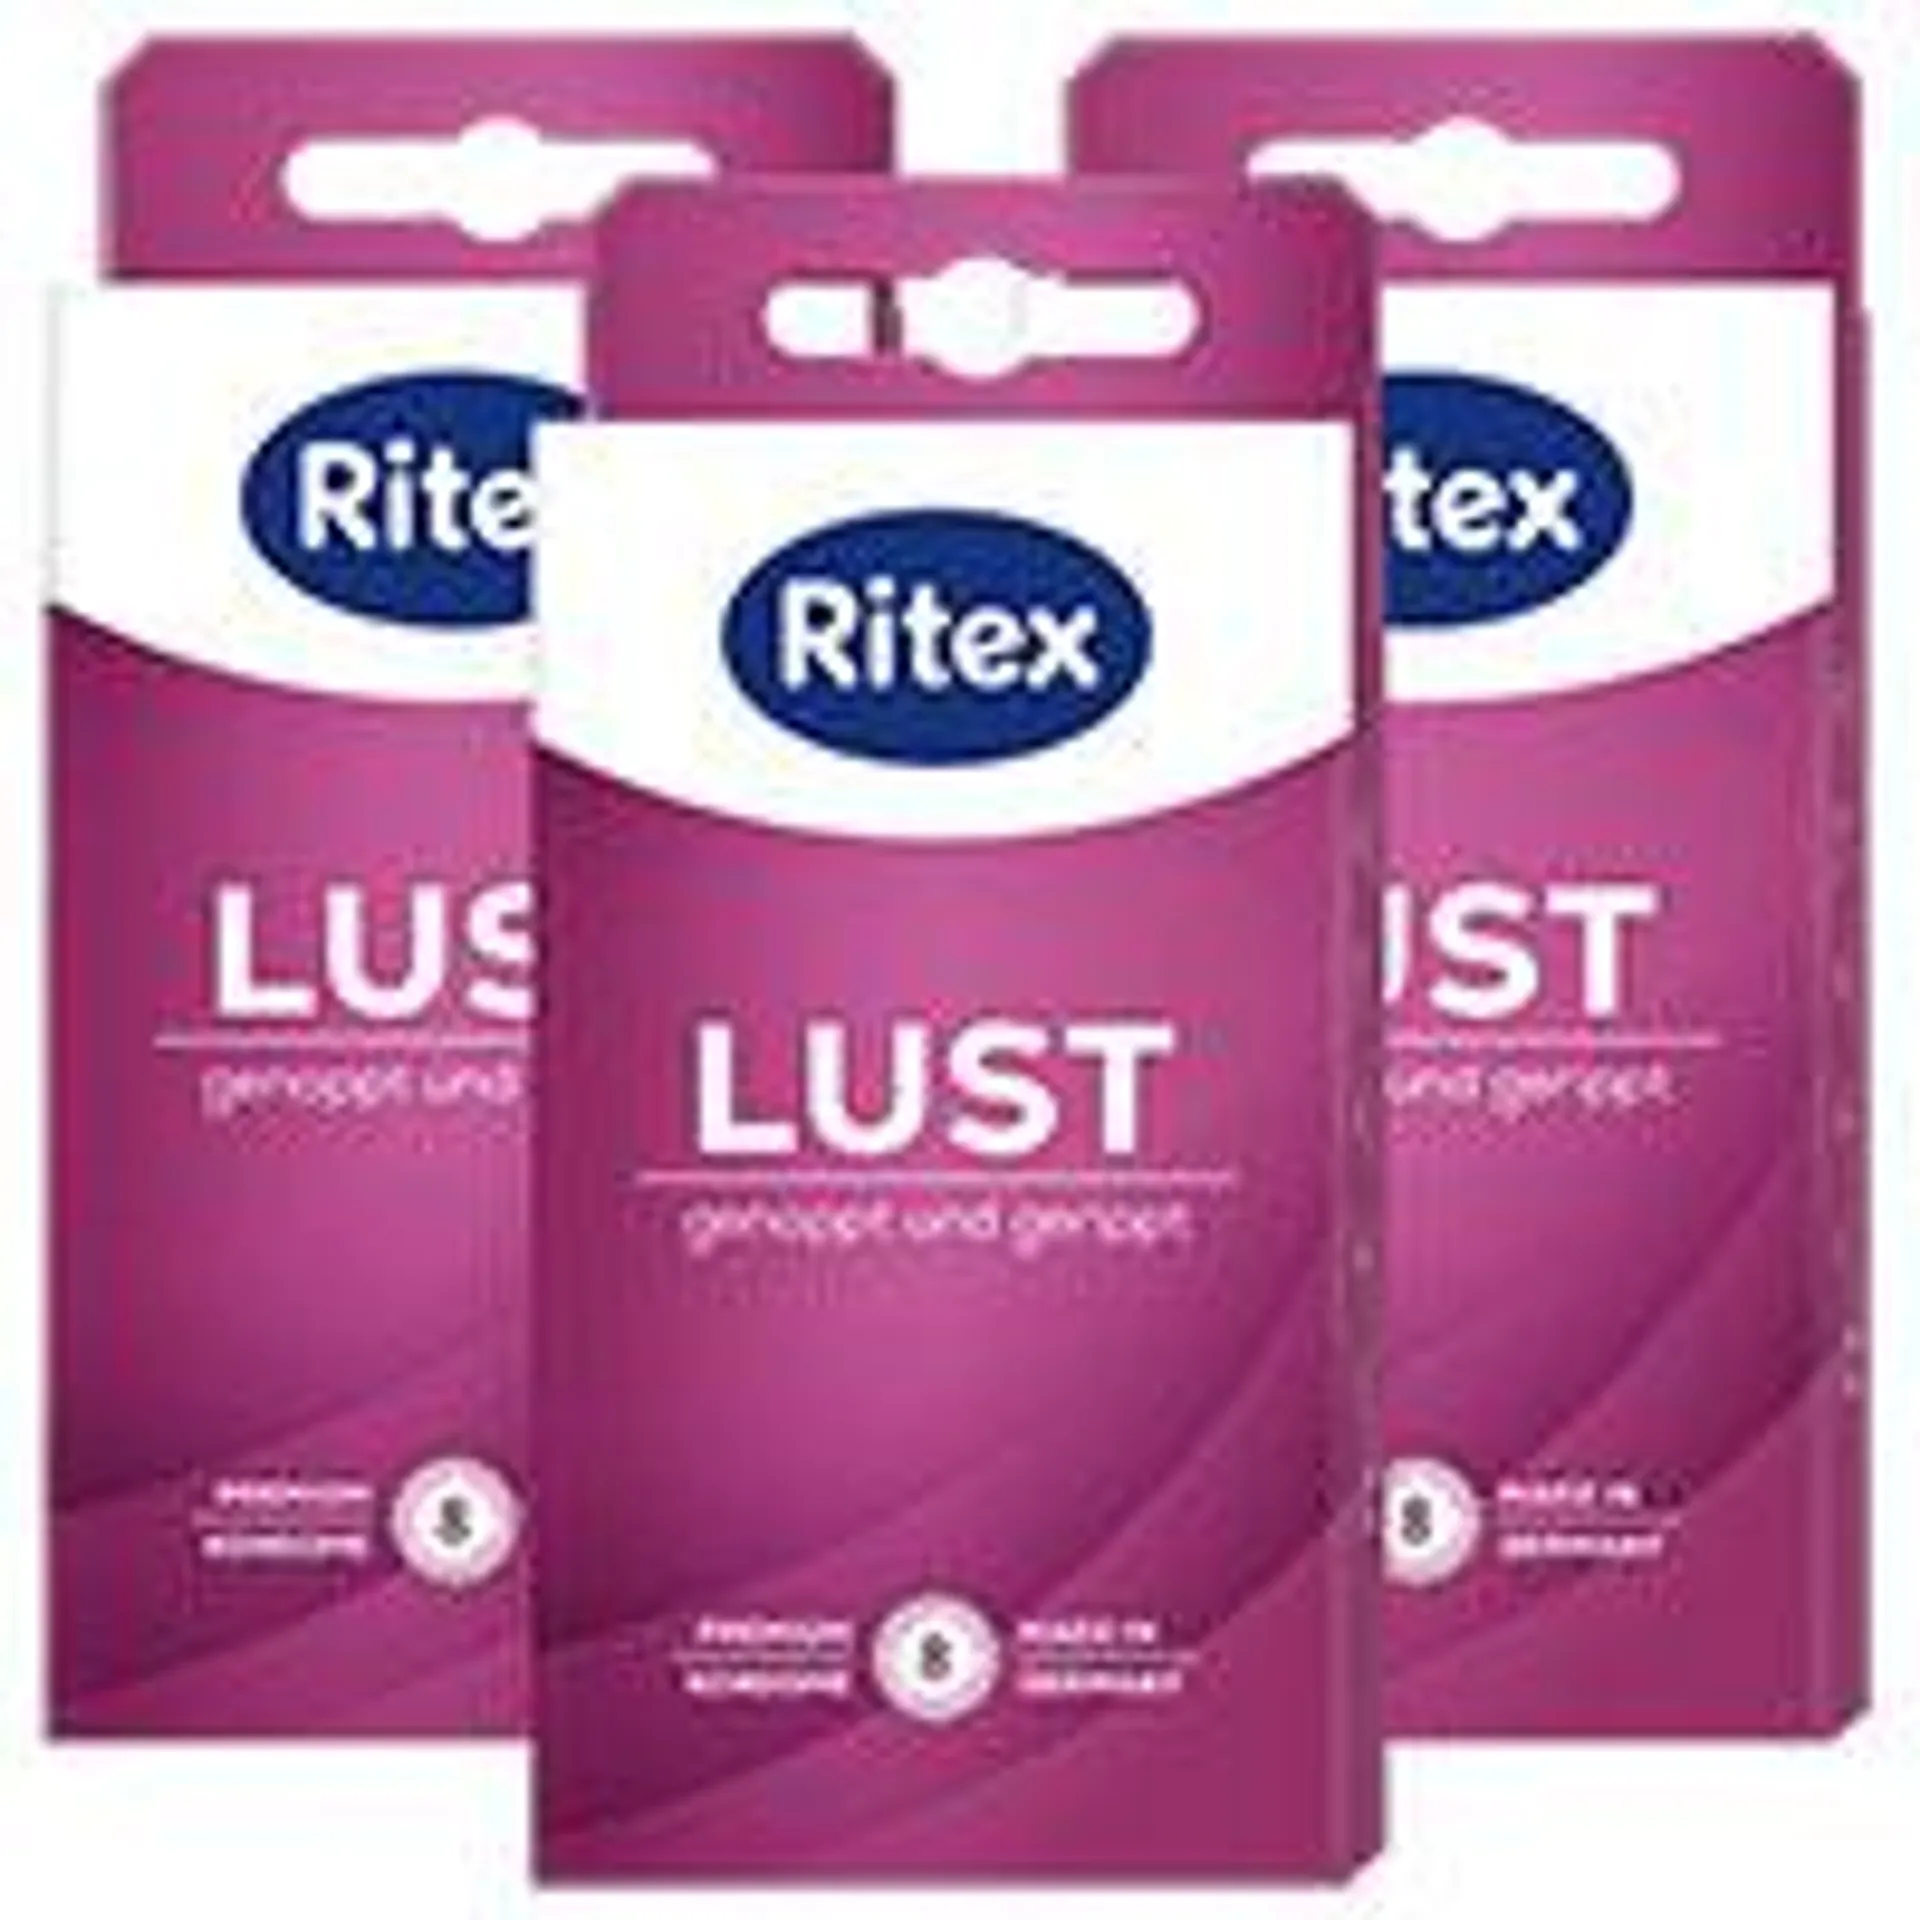 RITEX Lust Kondome Sparset